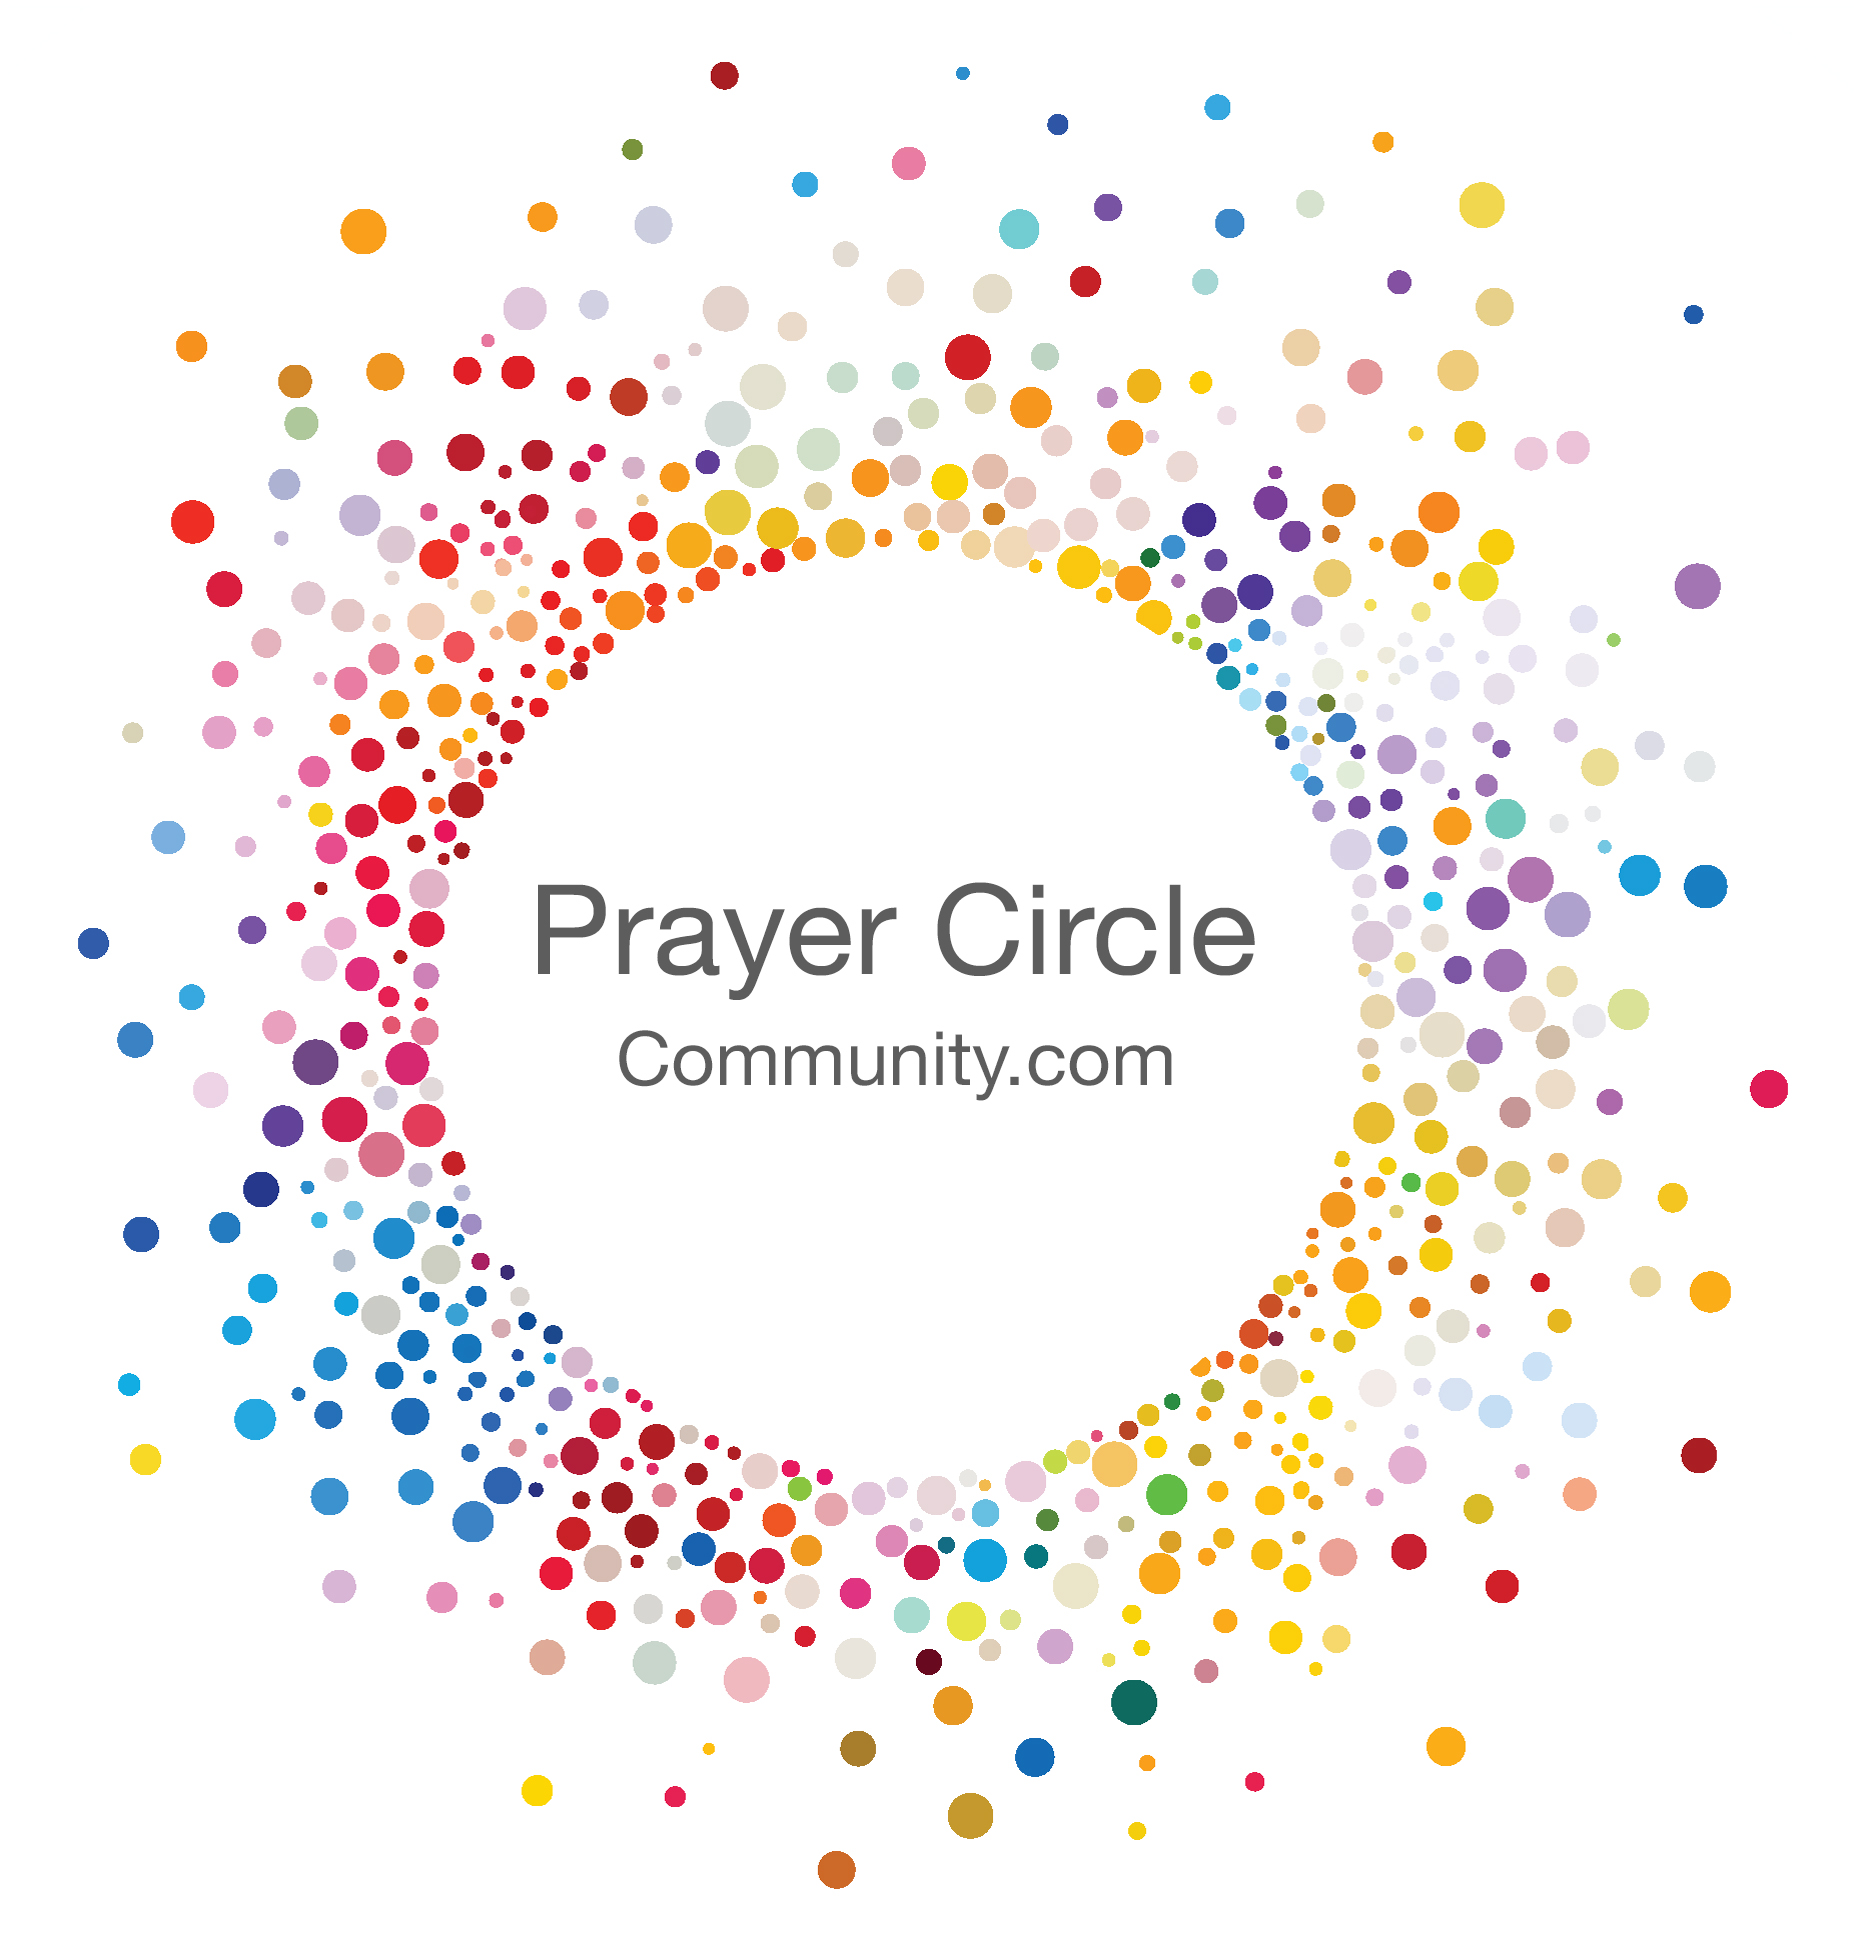 Join the Prayer Circle Community - Let's Pray